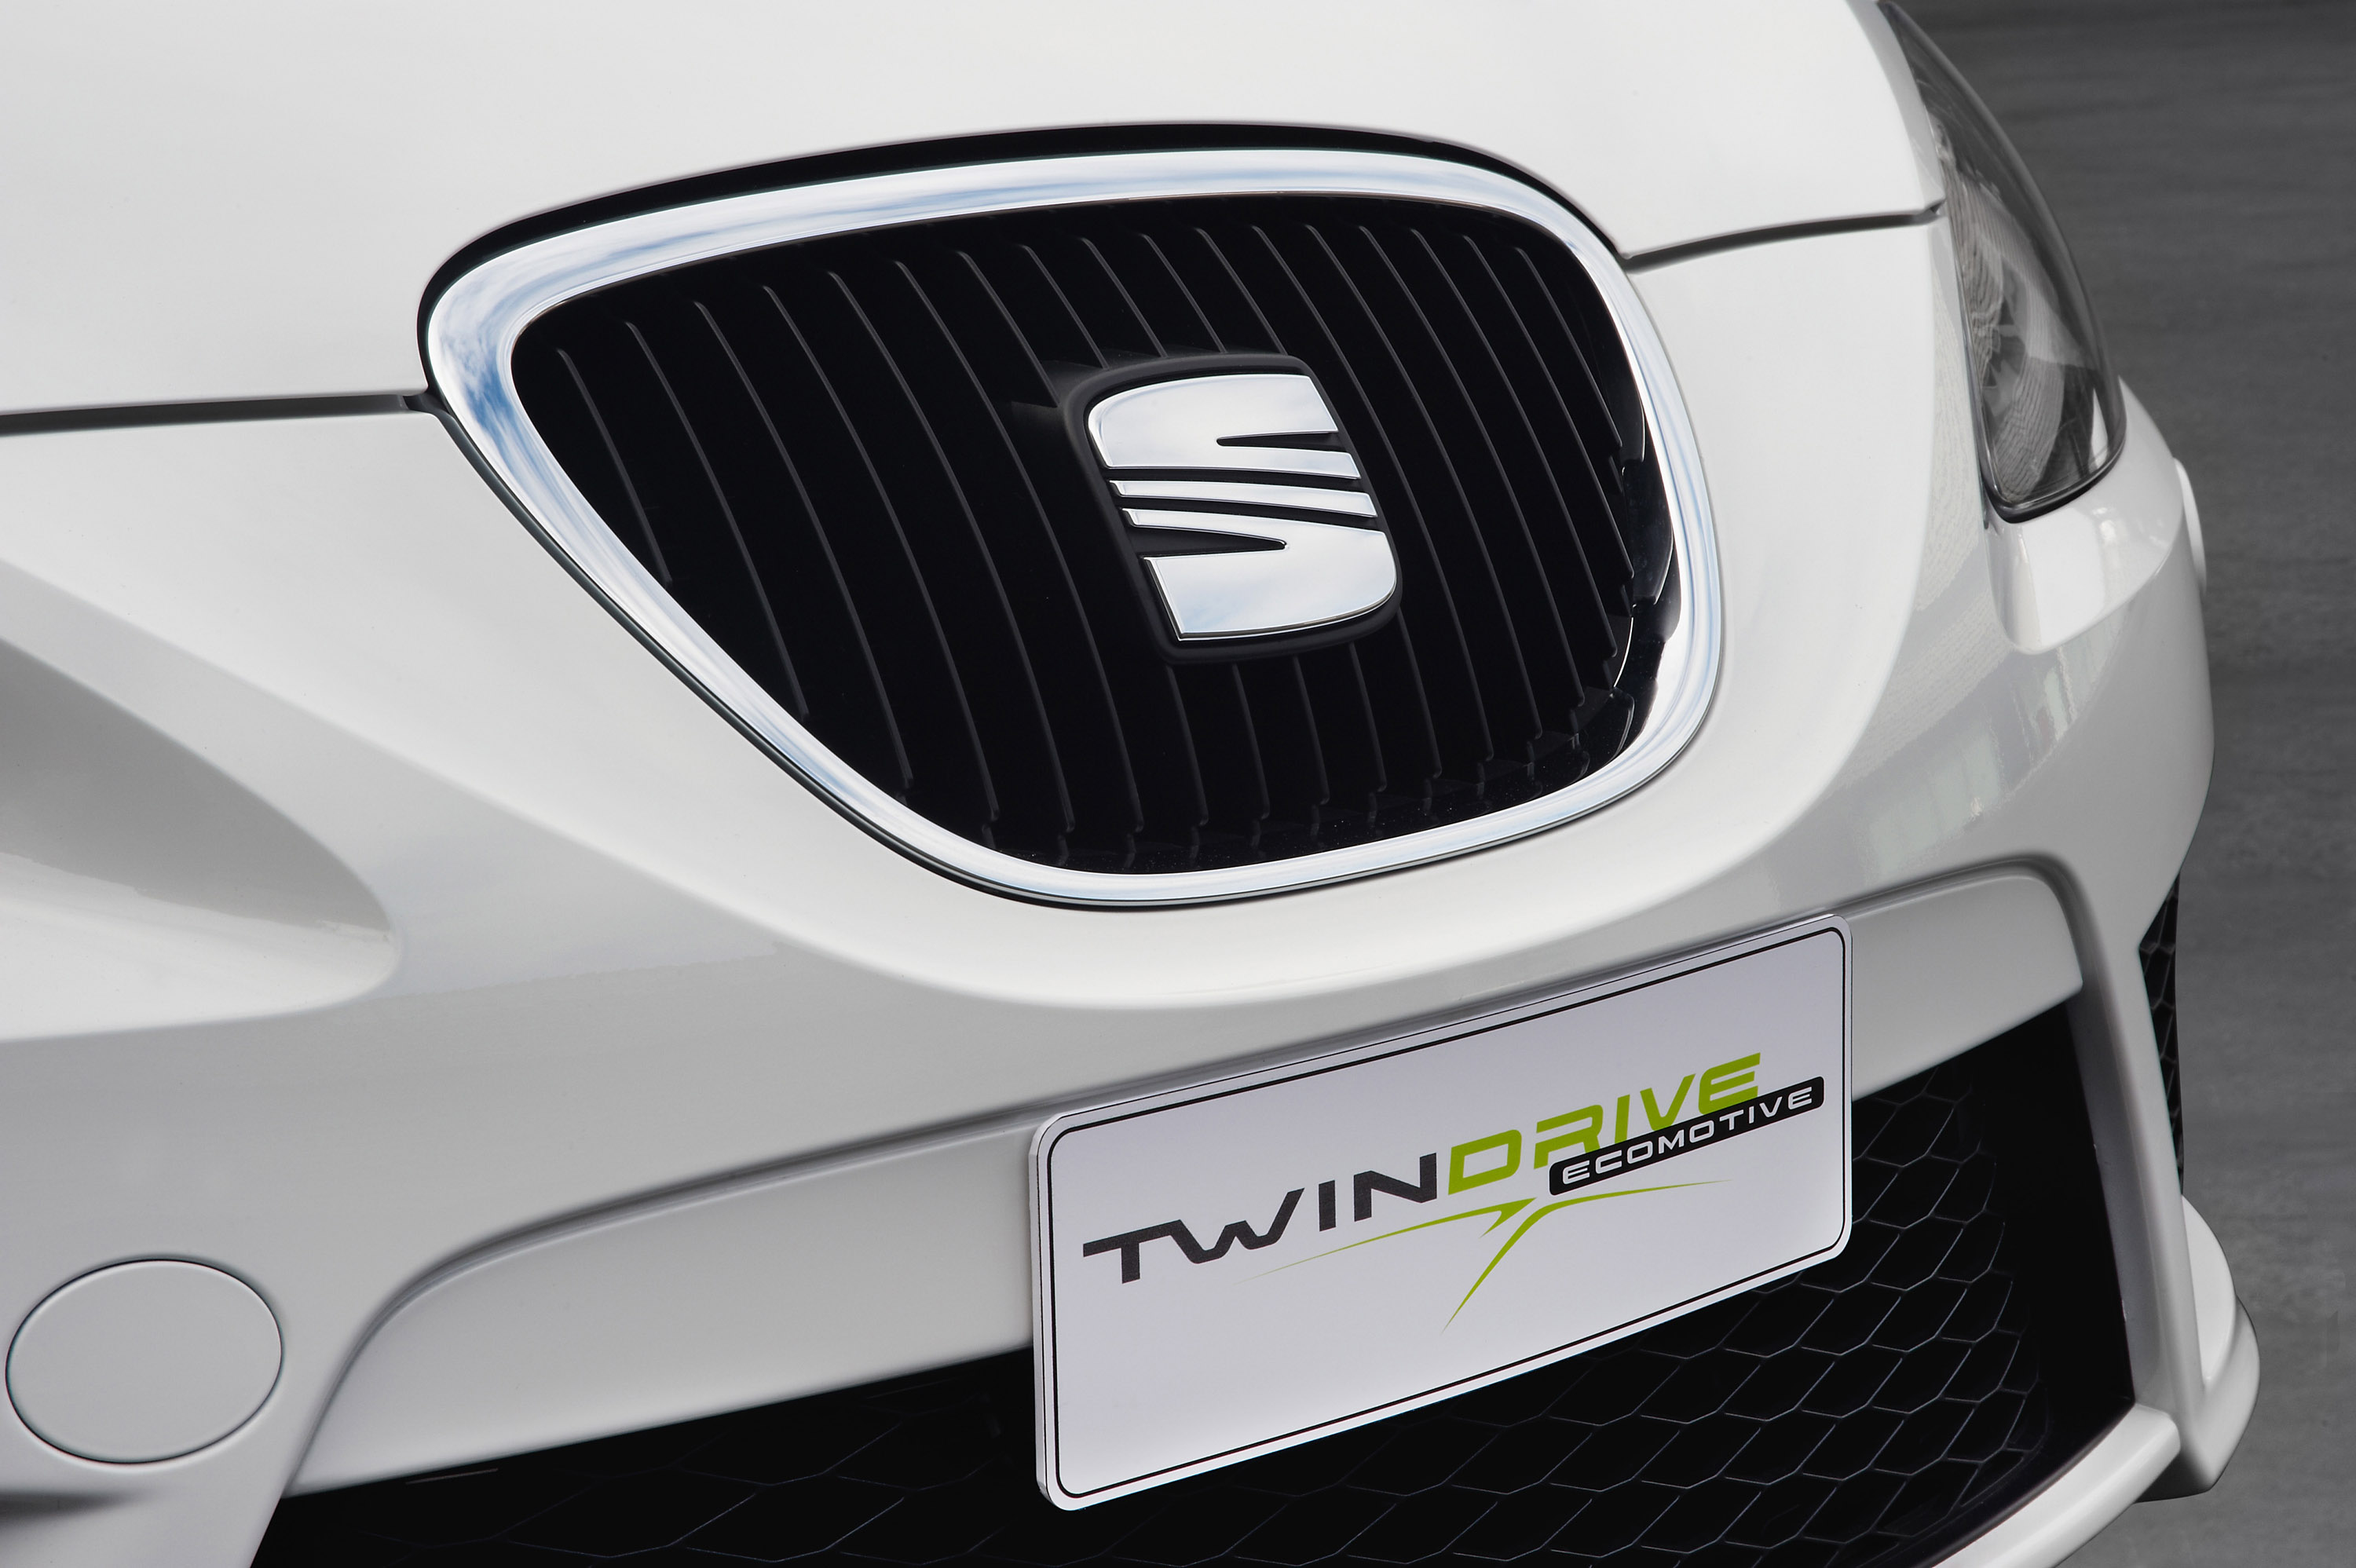 SEAT Leon Twin Drive Ecomotive project